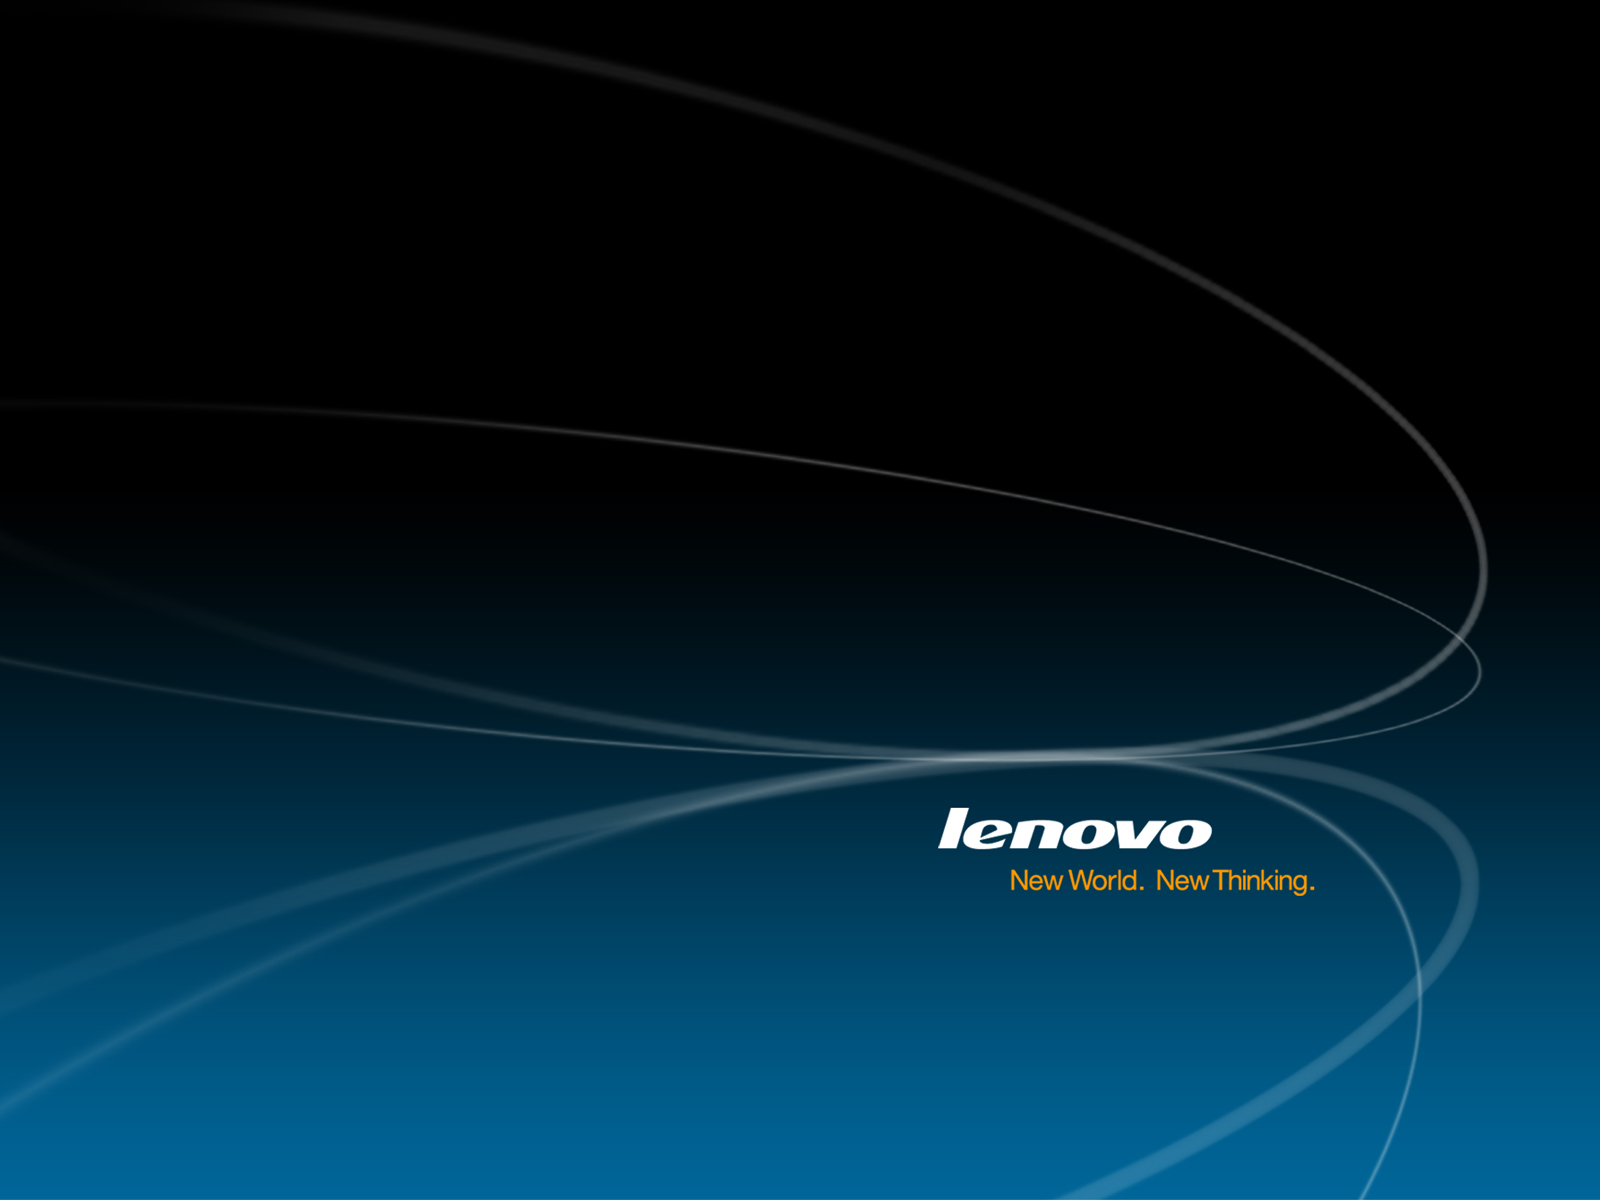 Hd Wallpapers Lenovo Thinkpad 1600 X 900 47 Kb Jpeg HD Wallpapers